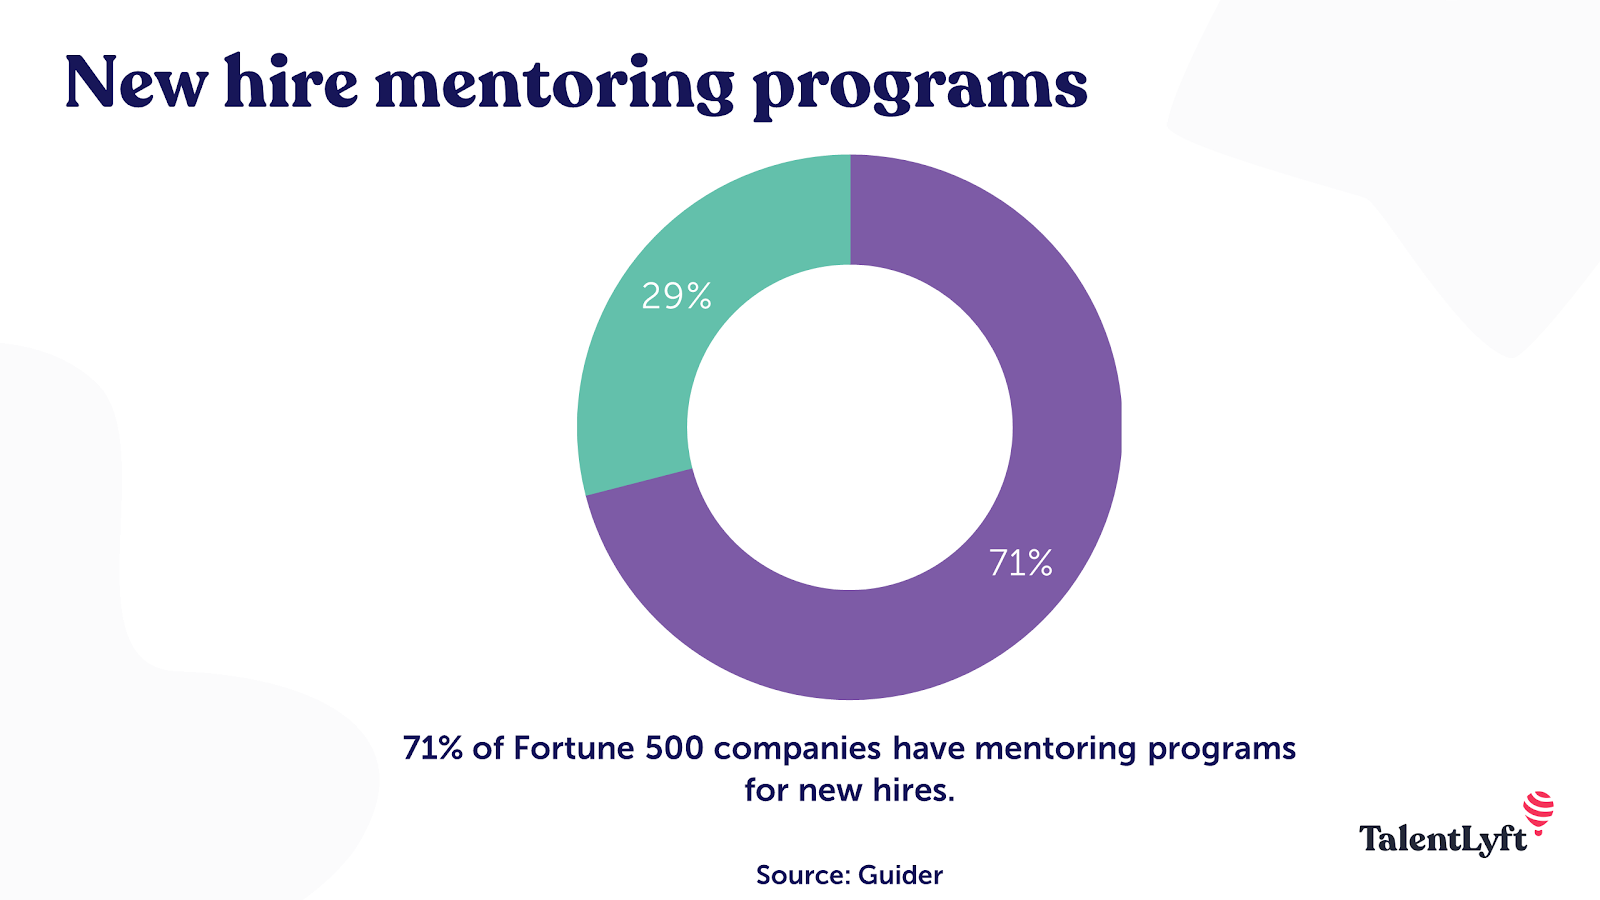 New hire mentoring programs